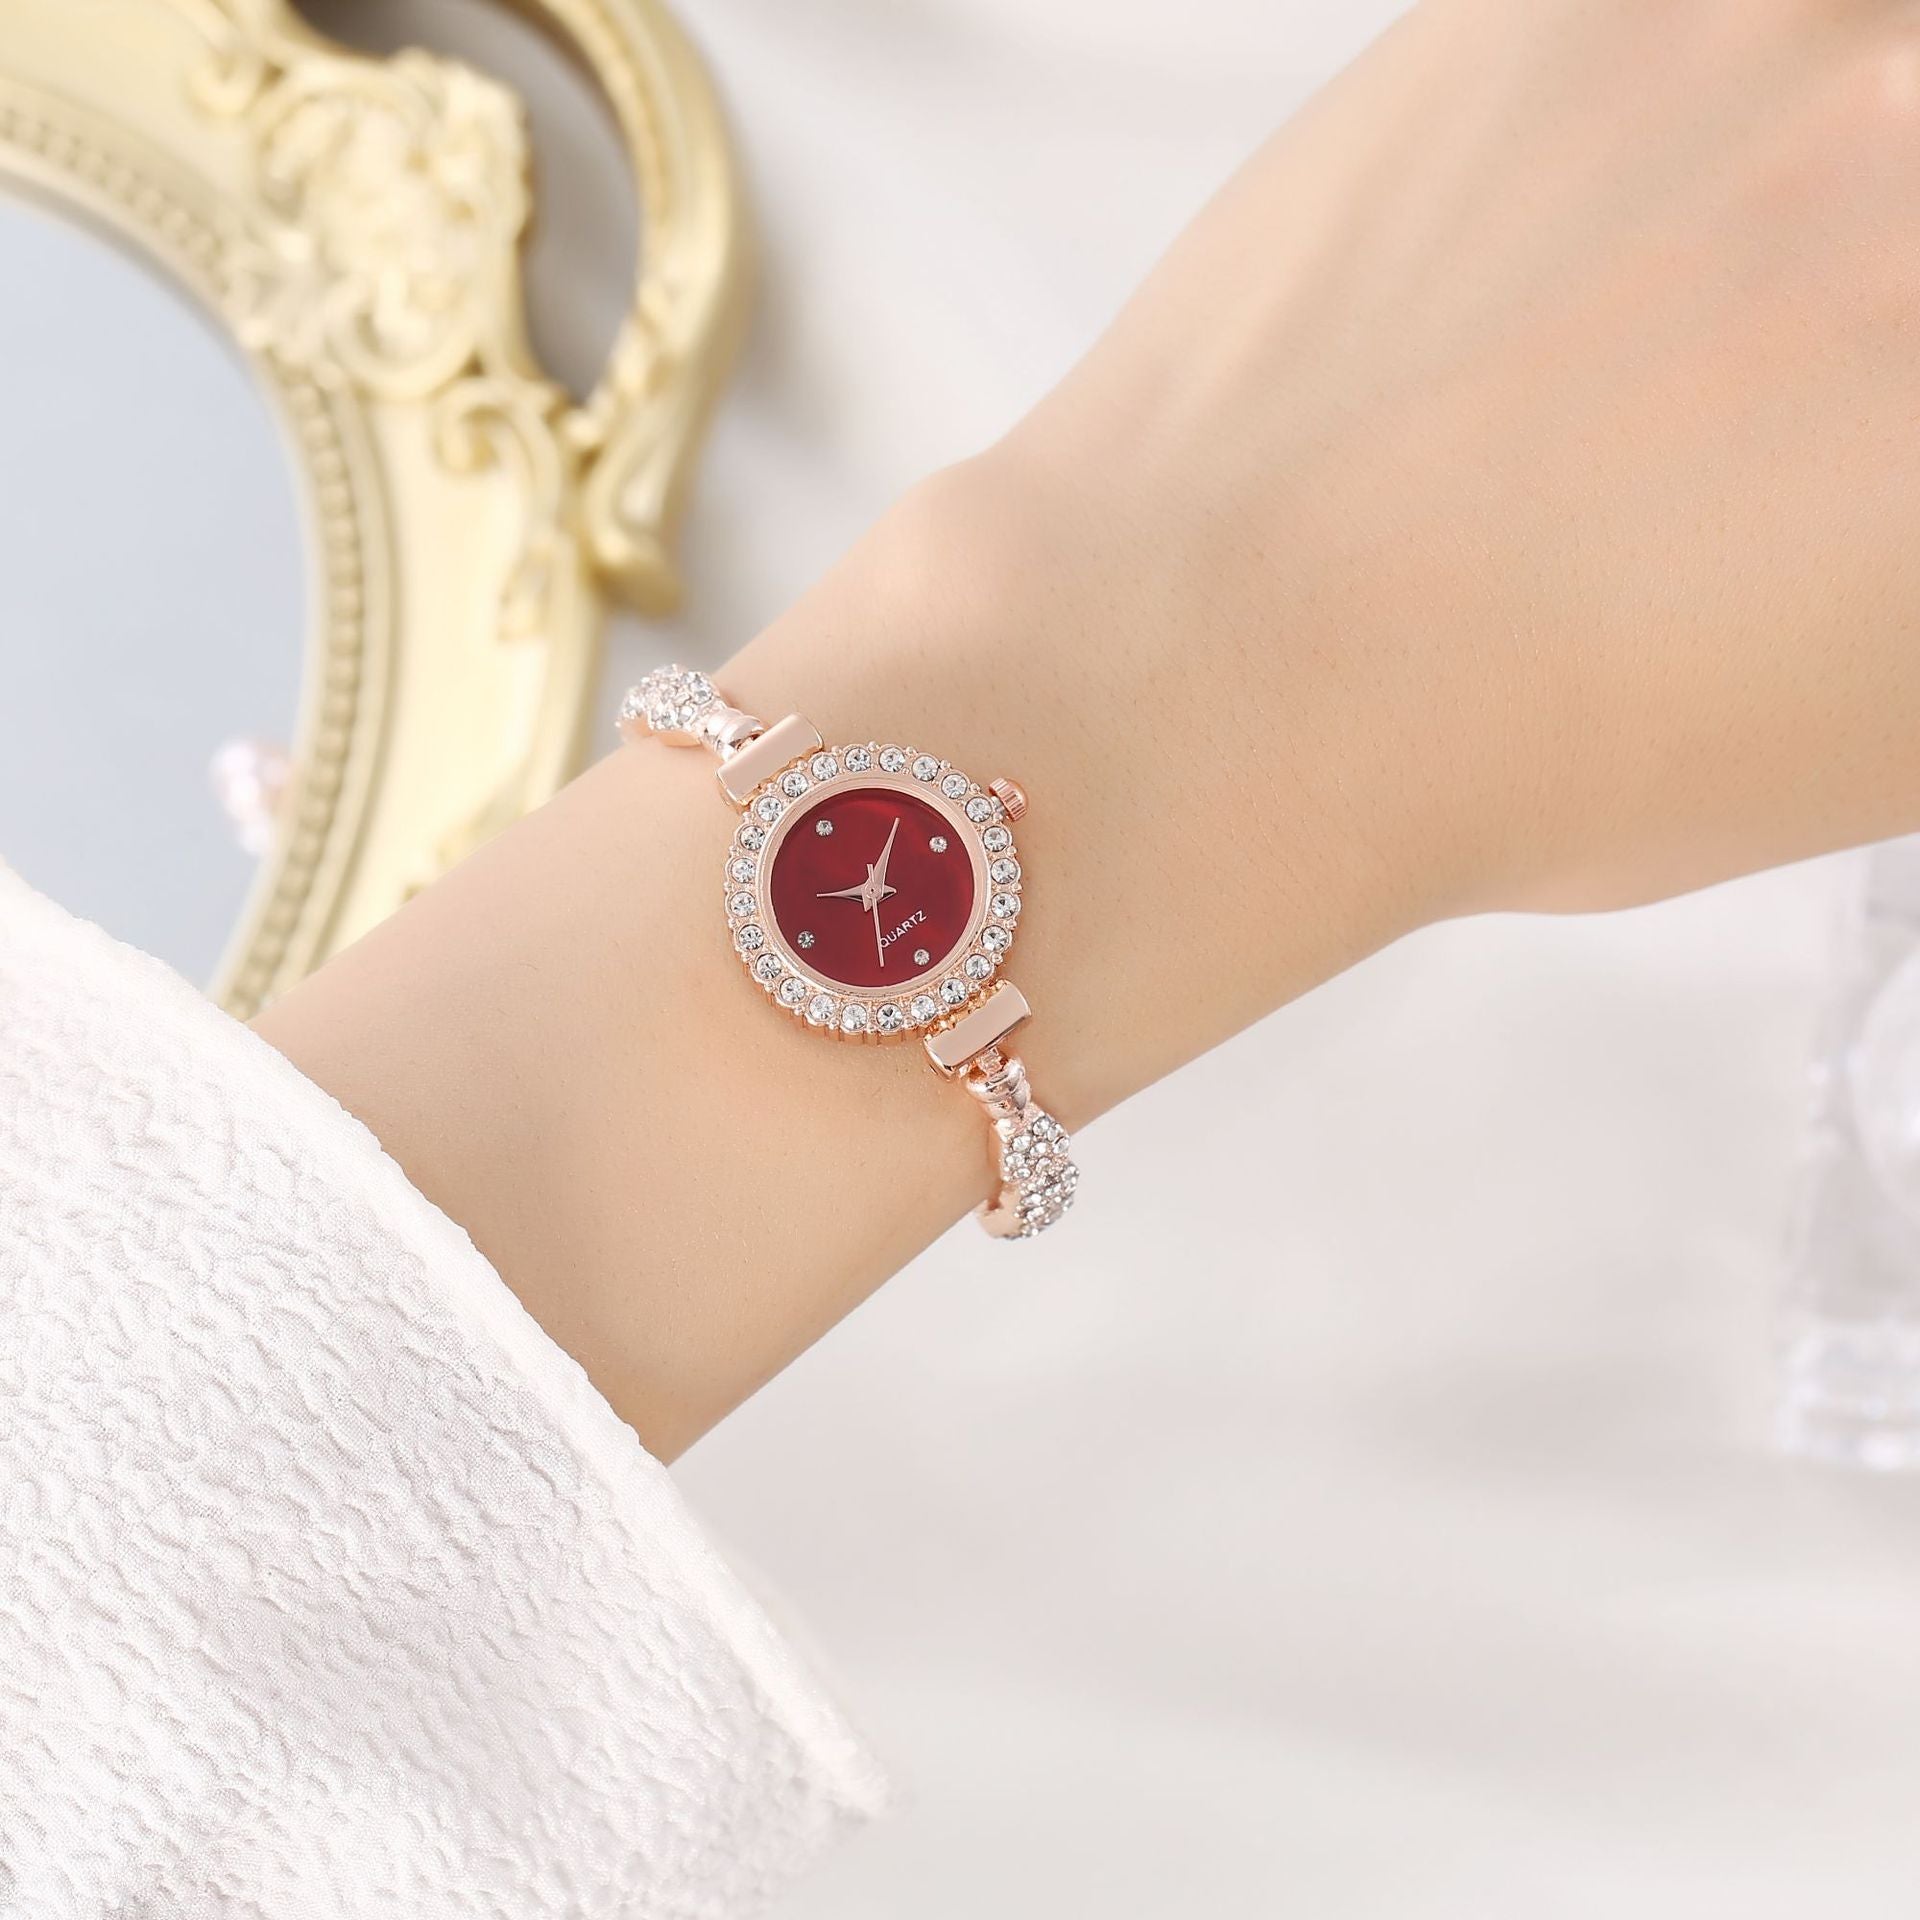 Adjustable Wrist Watch for Women Quartz Watch